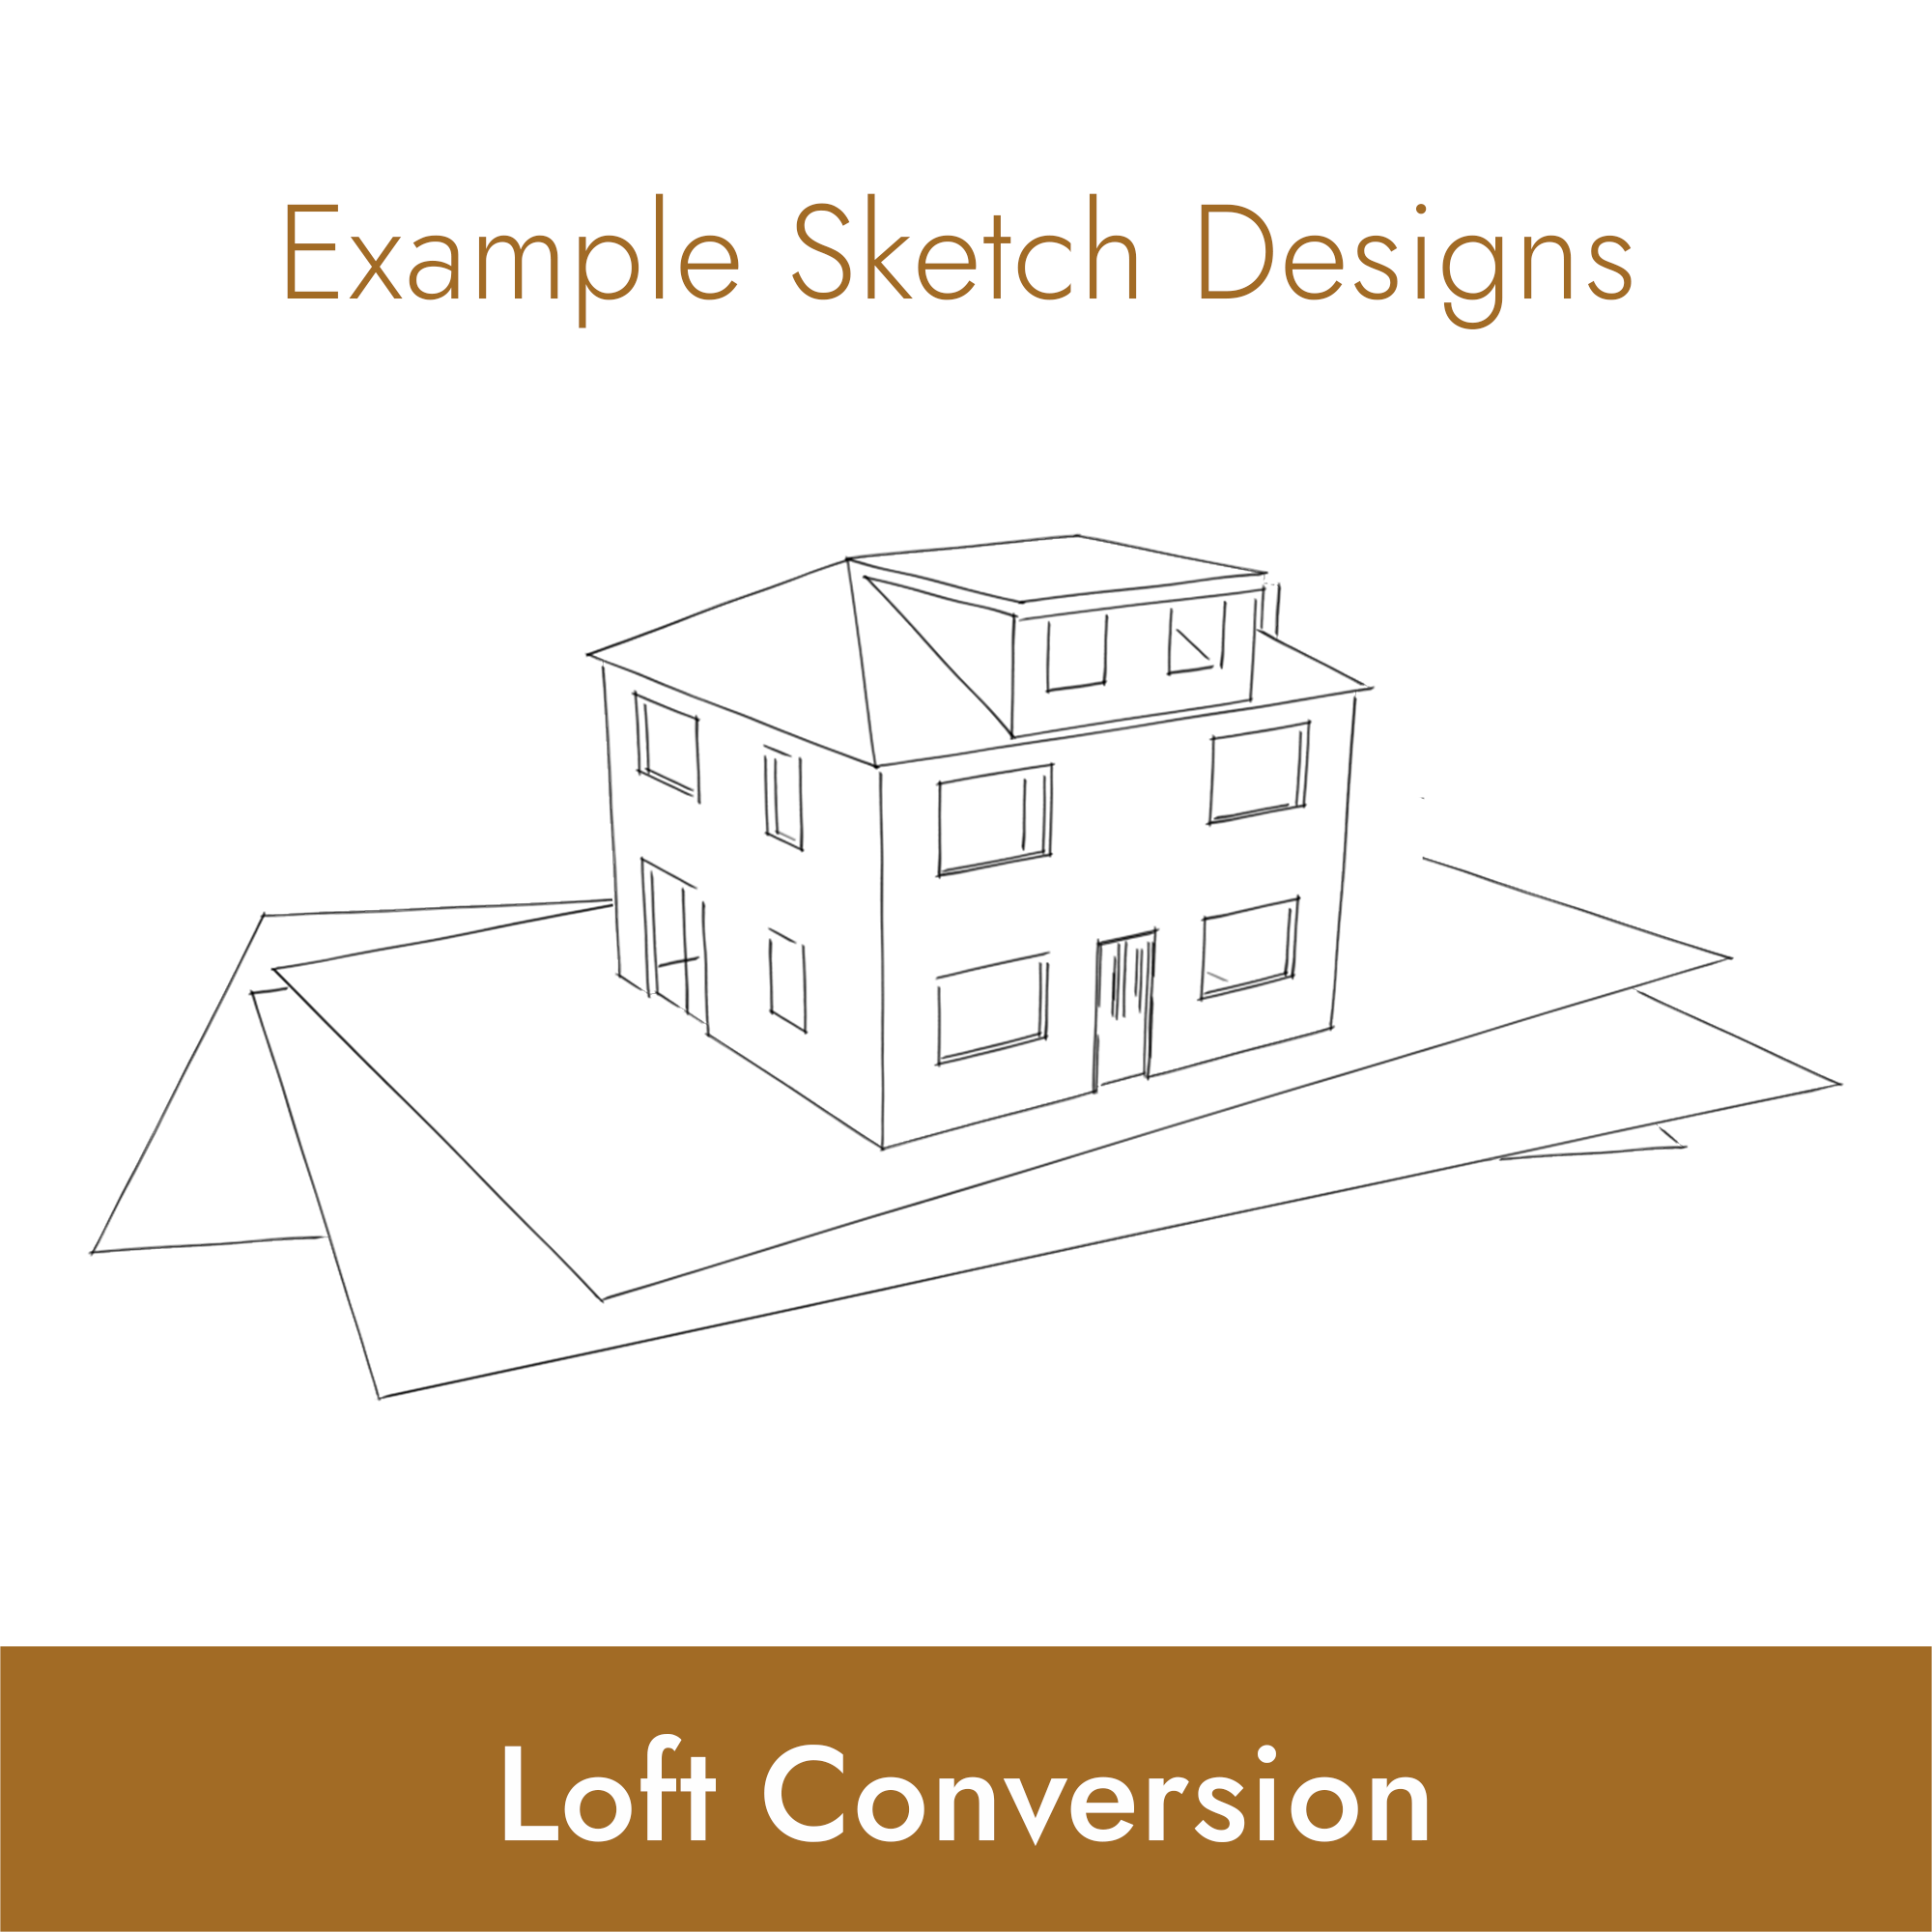 Sketch · Design, collaborate, prototype and handoff